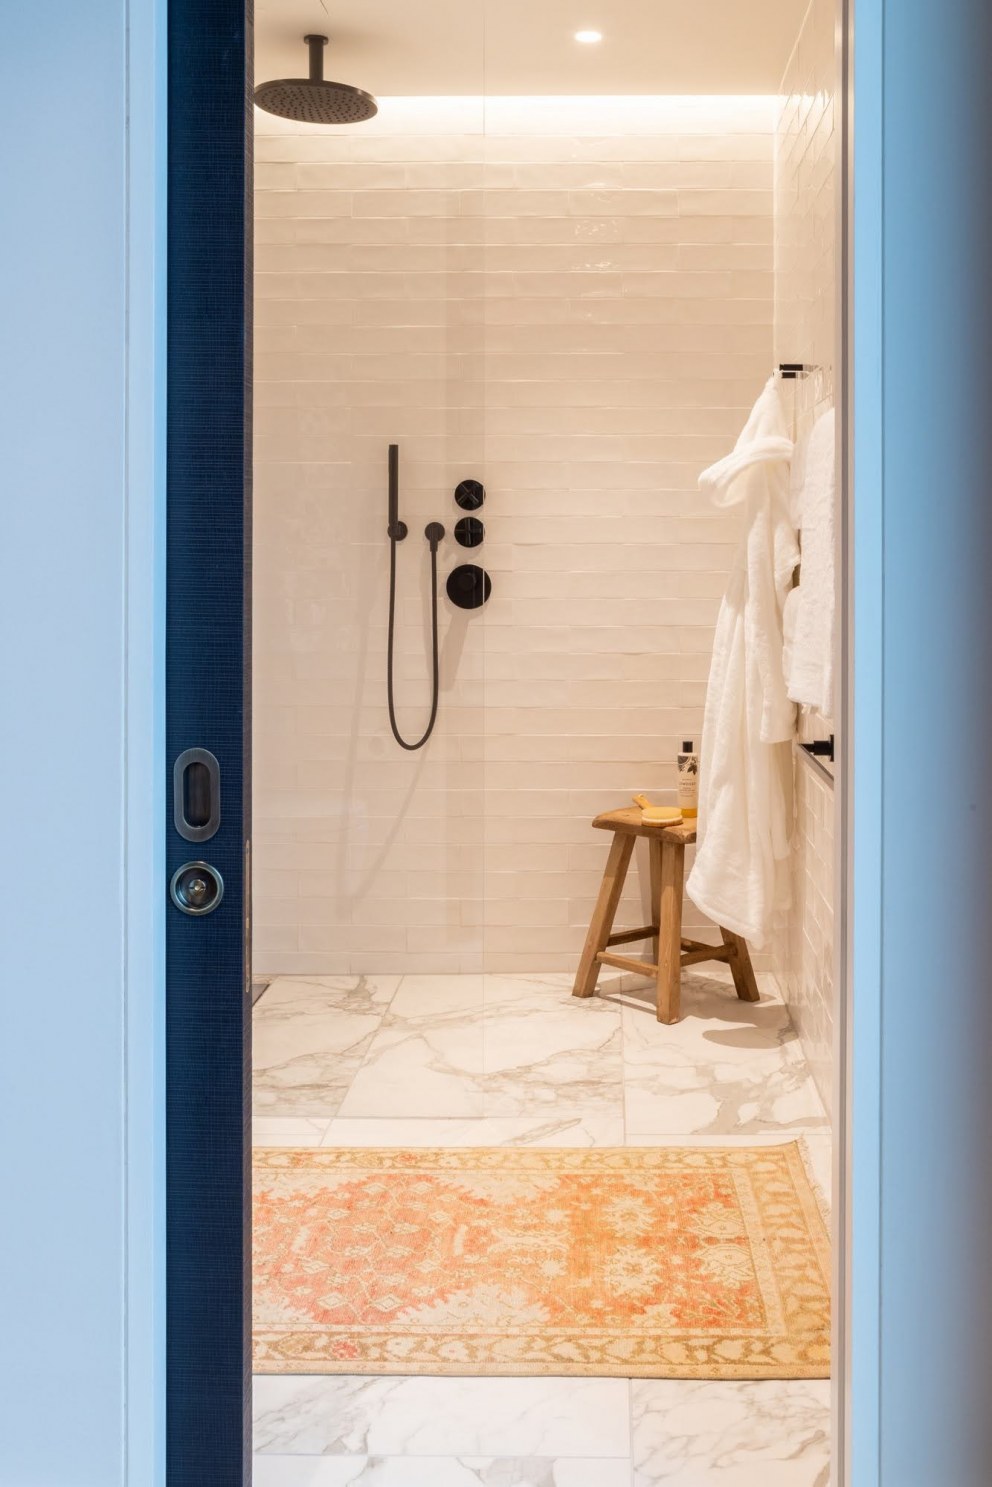 Soho Penthouse | guest bedroom bathroom | Interior Designers